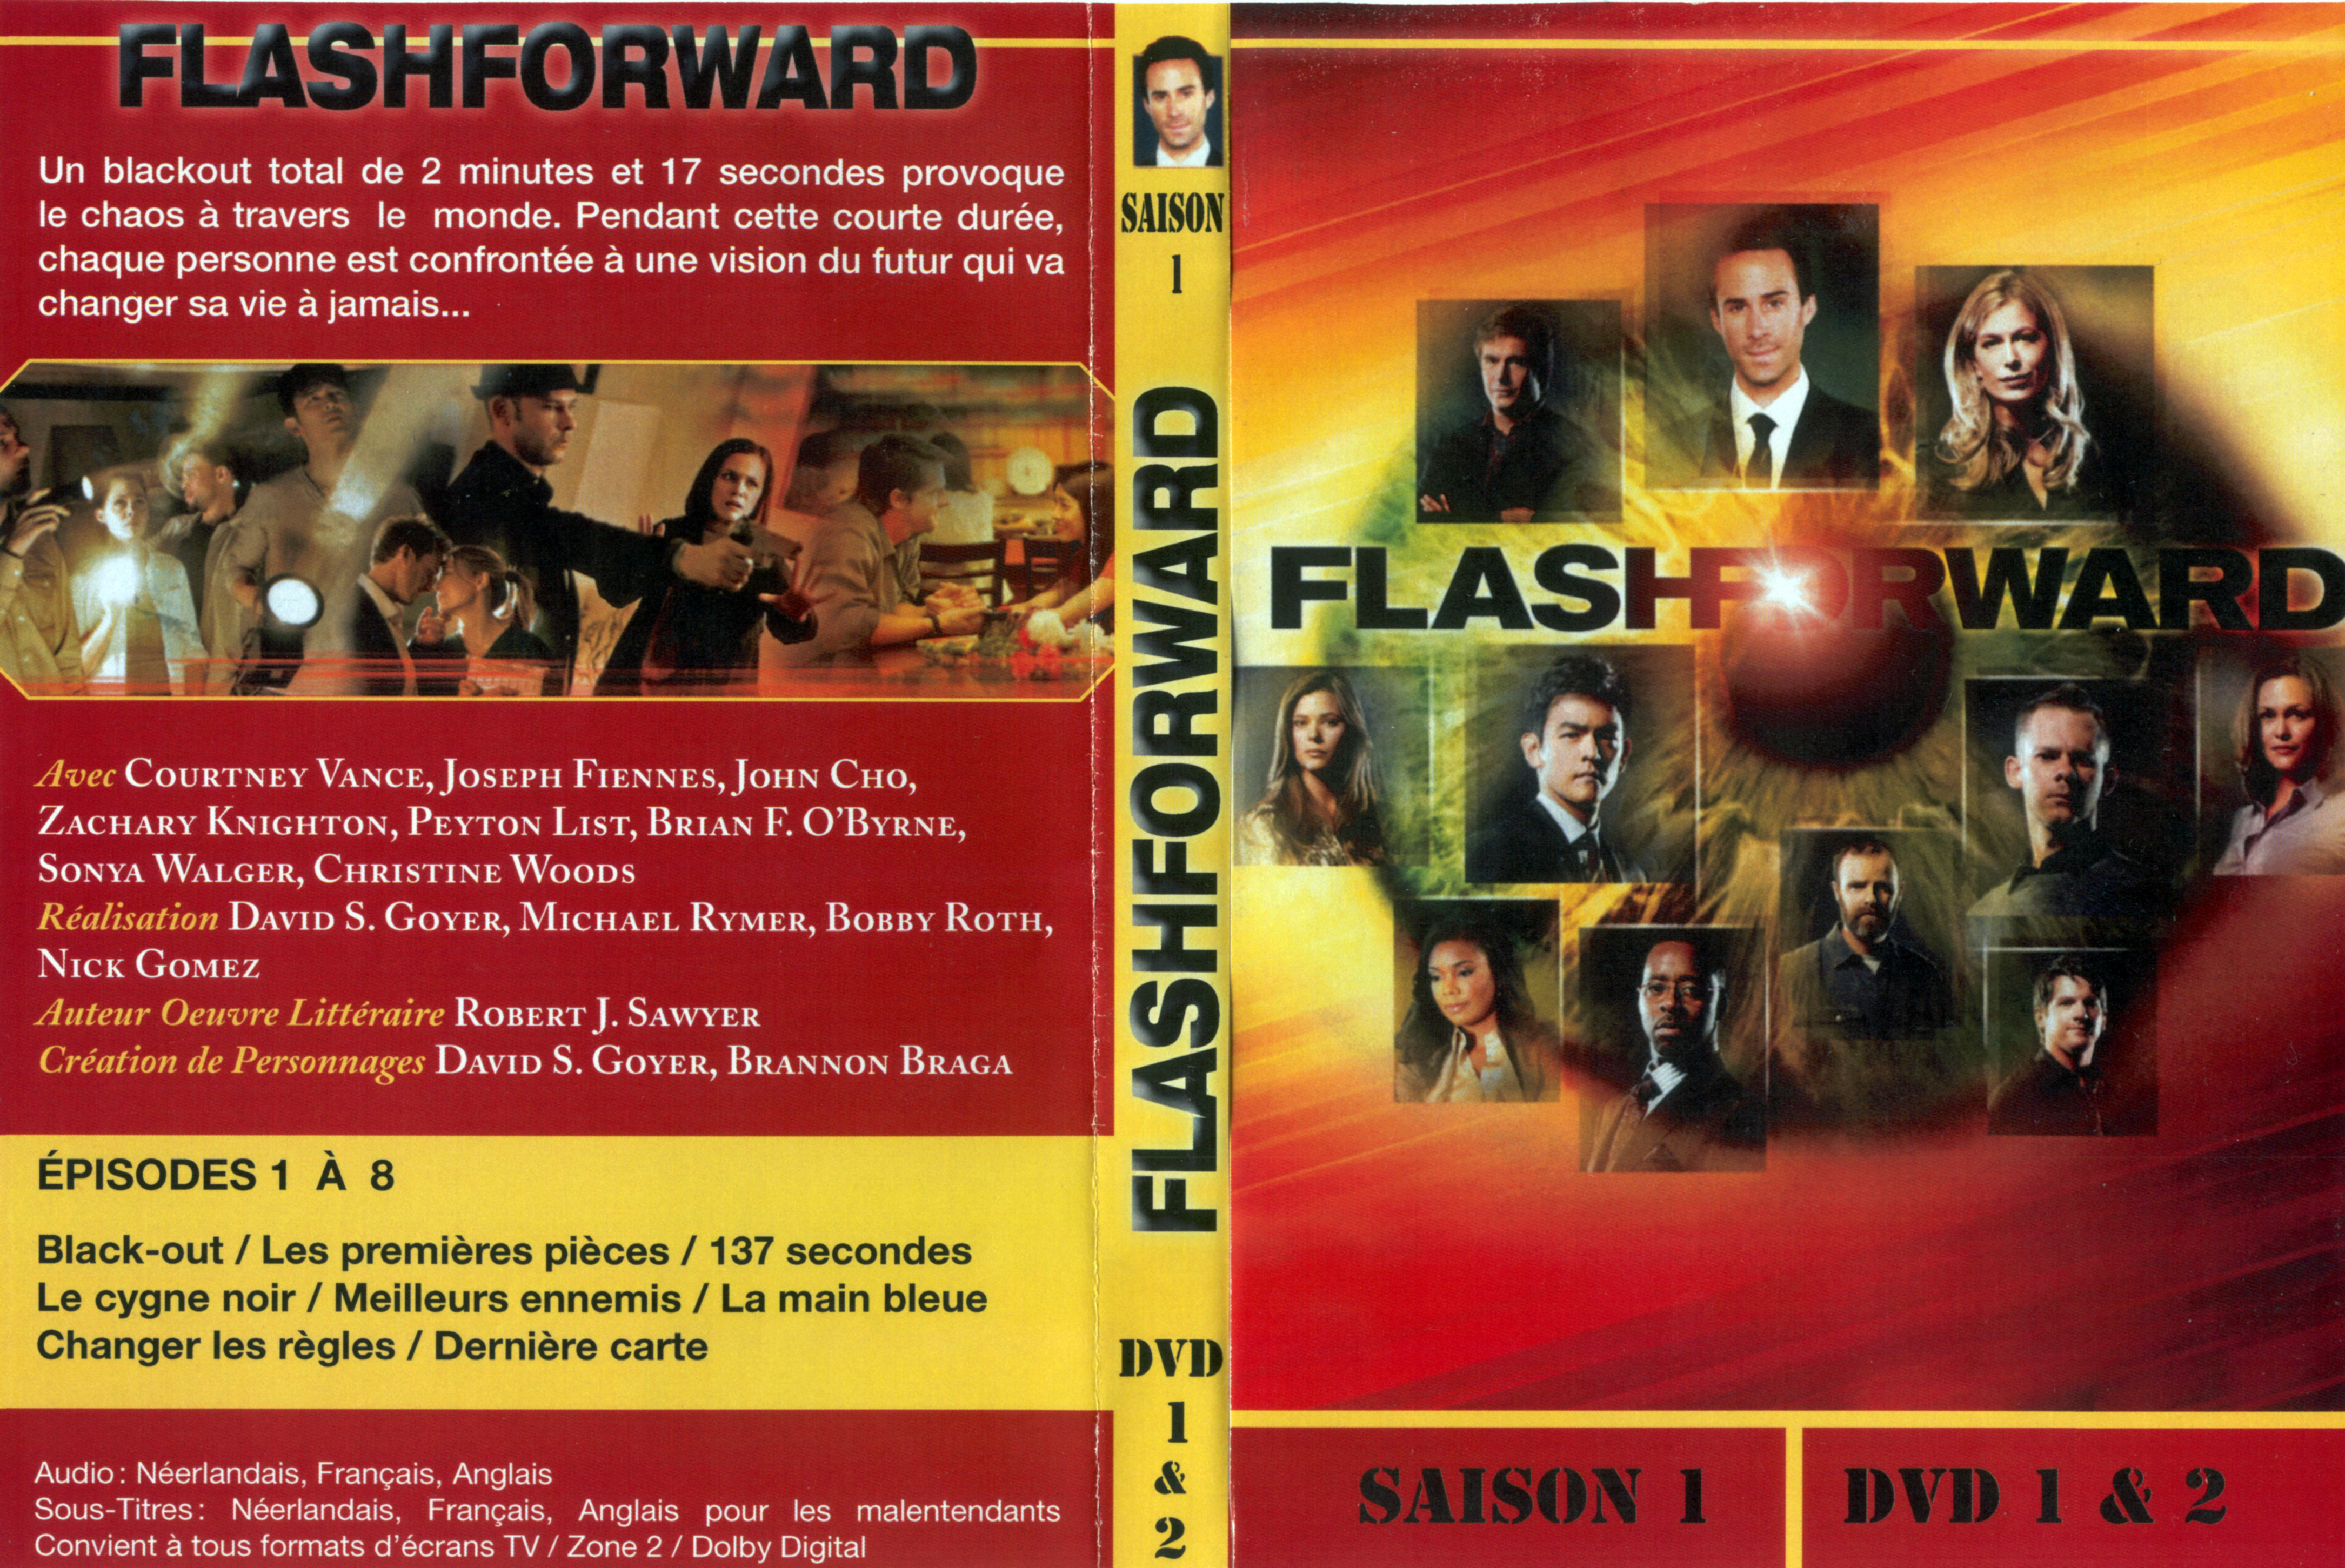 Jaquette DVD Flashforward Saison 1 DVD 1